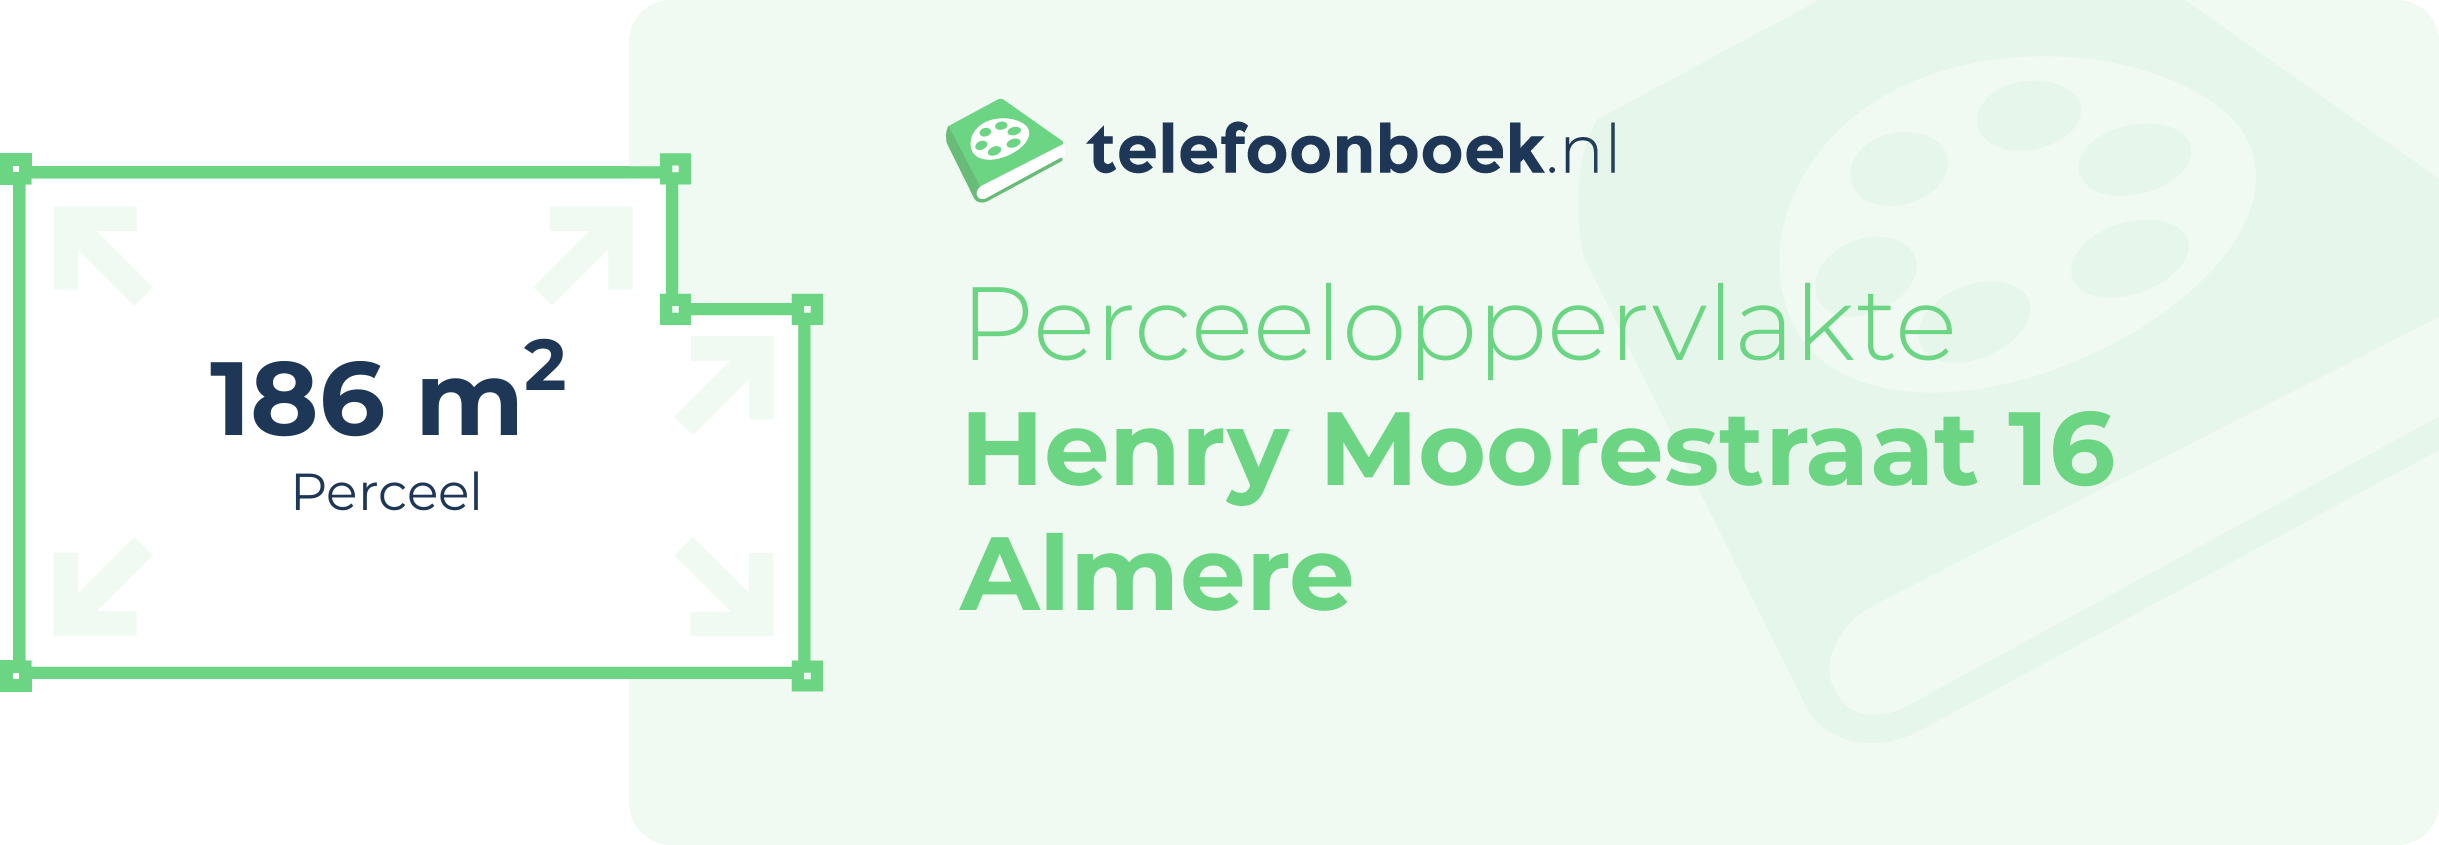 Perceeloppervlakte Henry Moorestraat 16 Almere